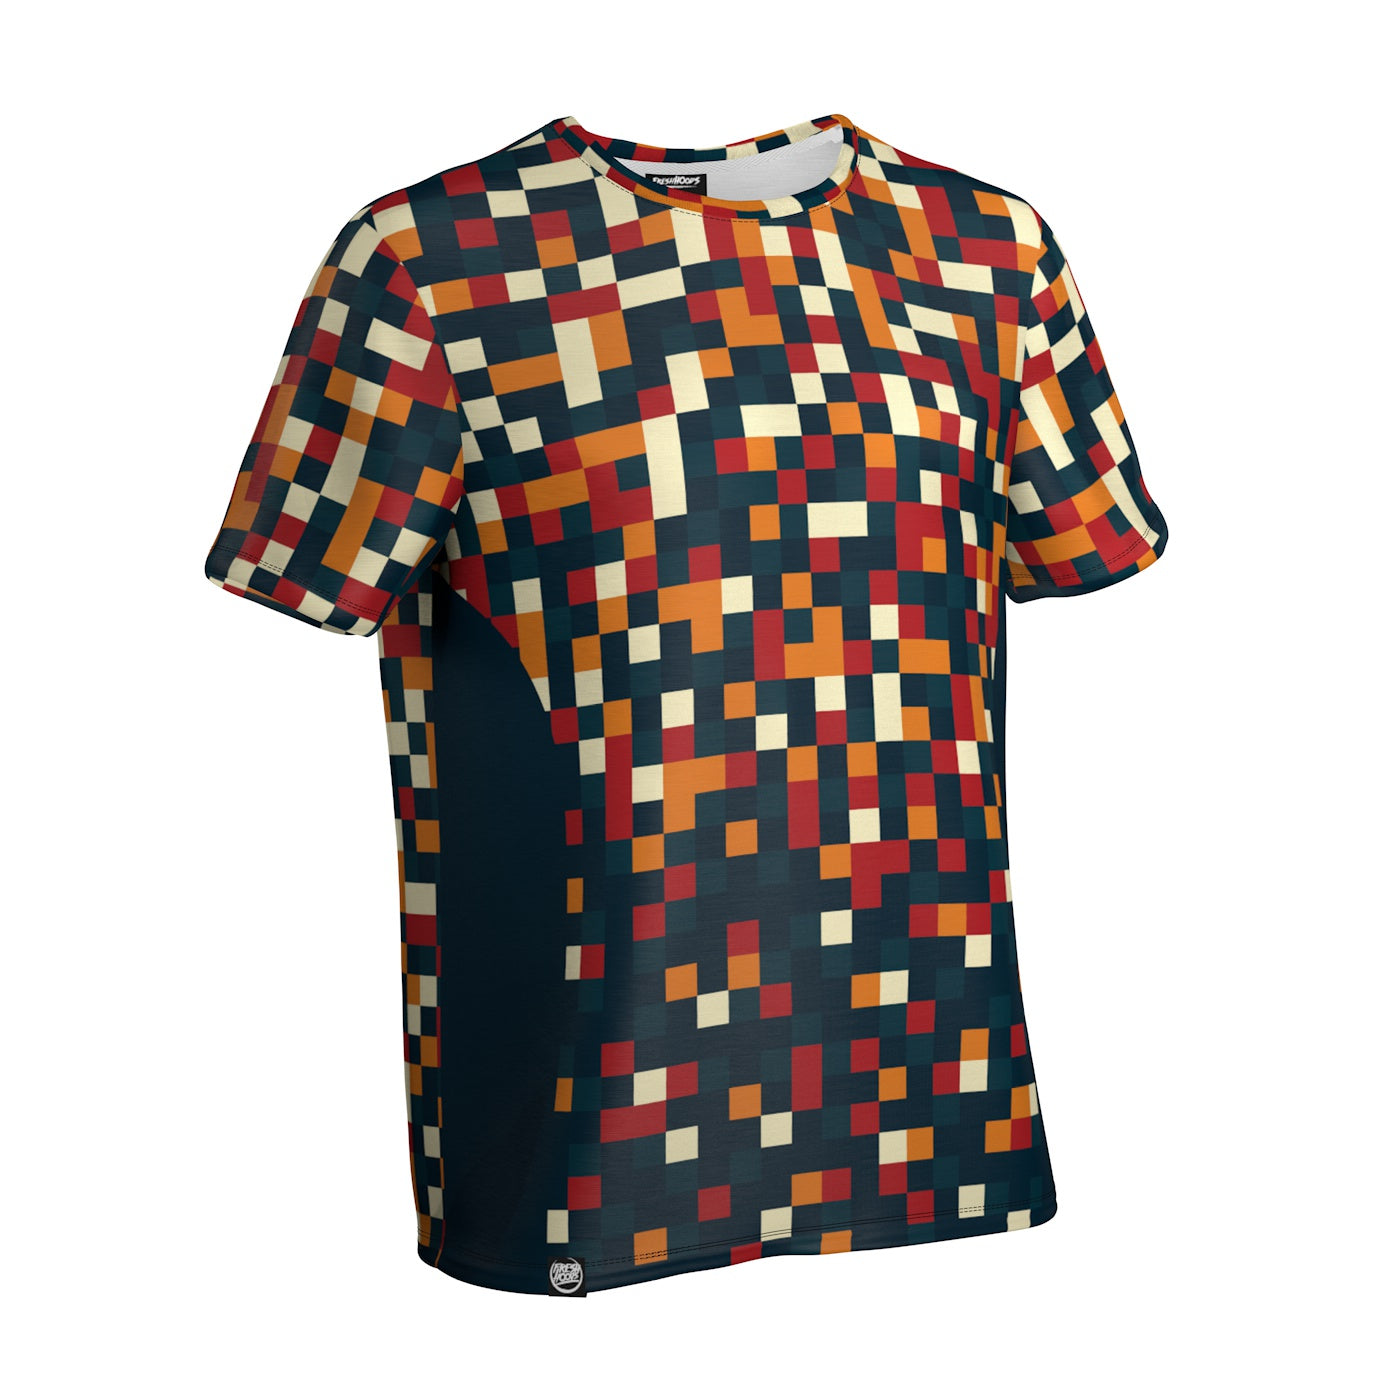 Pixel Block T-Shirt